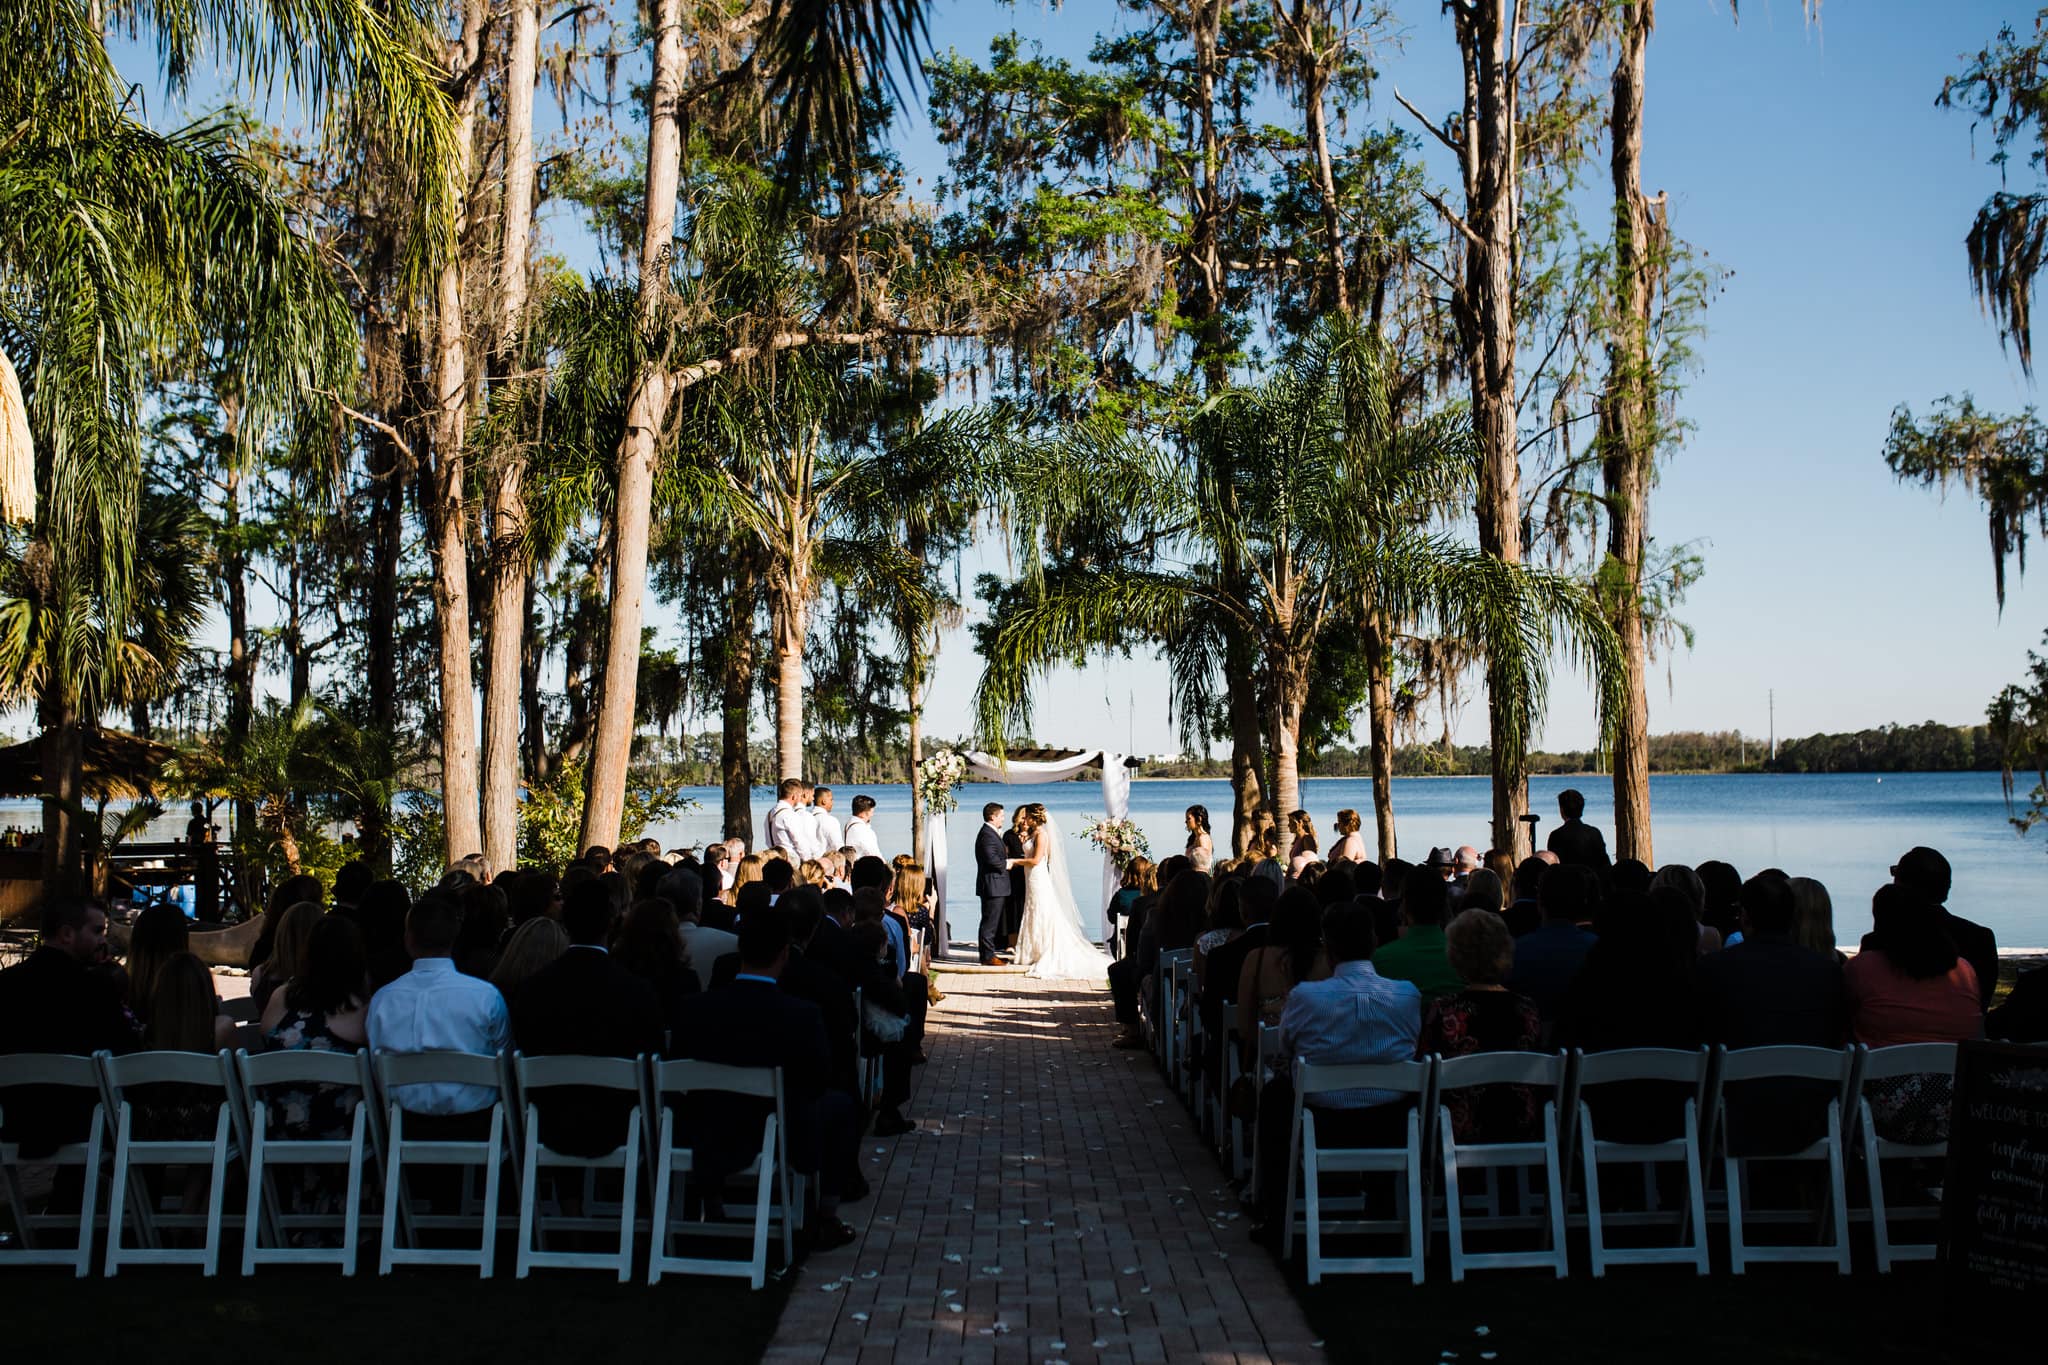 A tropical paradise cove wedding